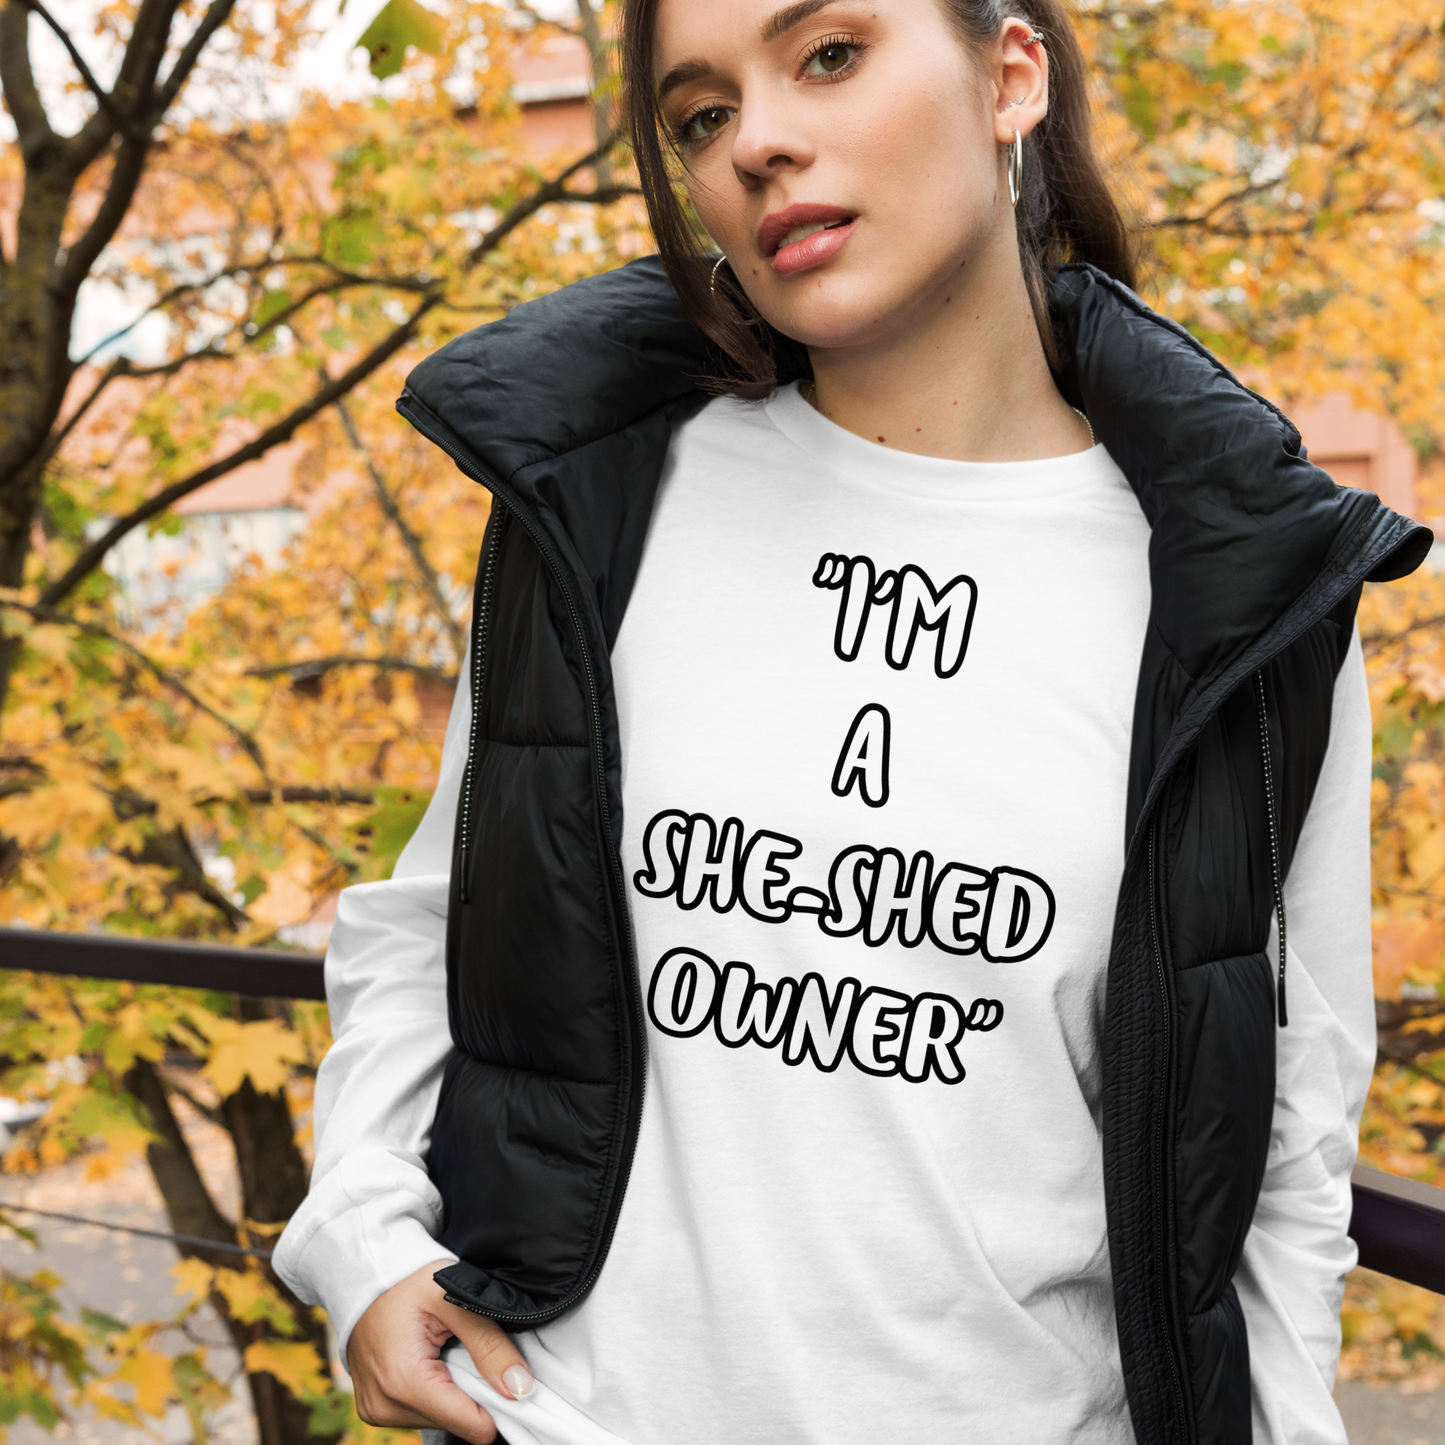 She-Shed Owner Long Sleeve Shirt